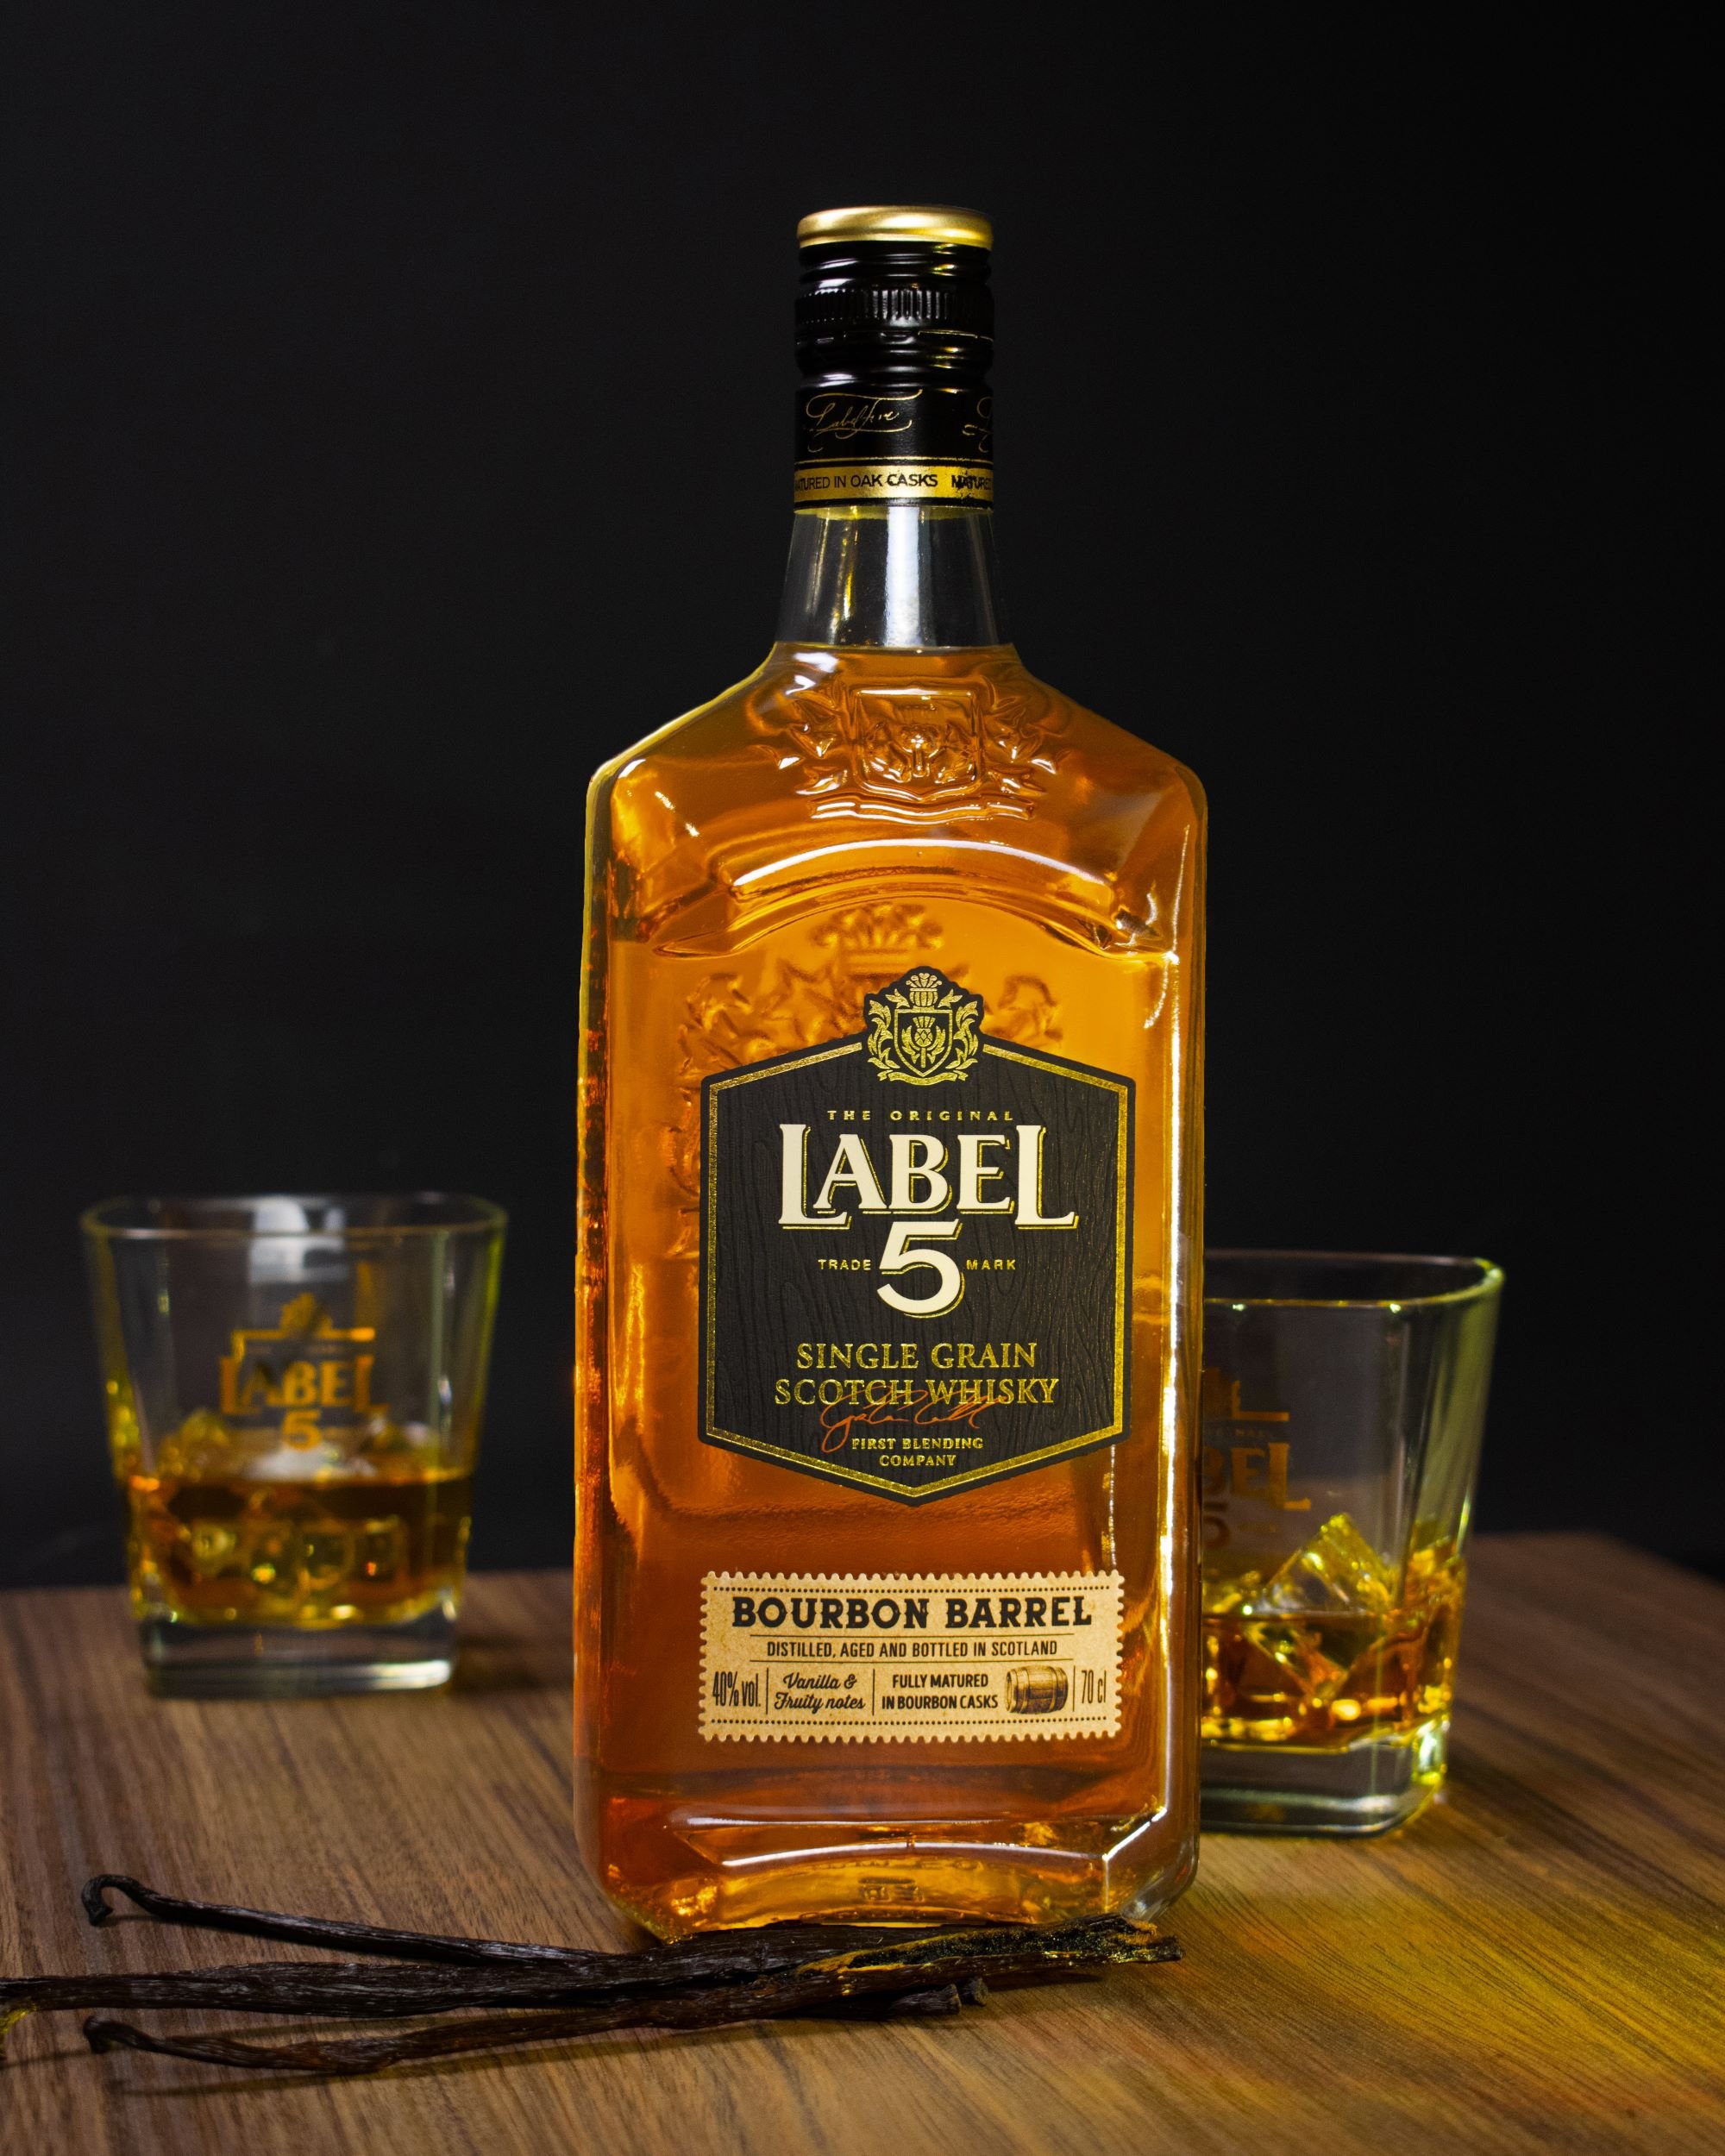 Label 5 launches Bourbon Barrel to UK market